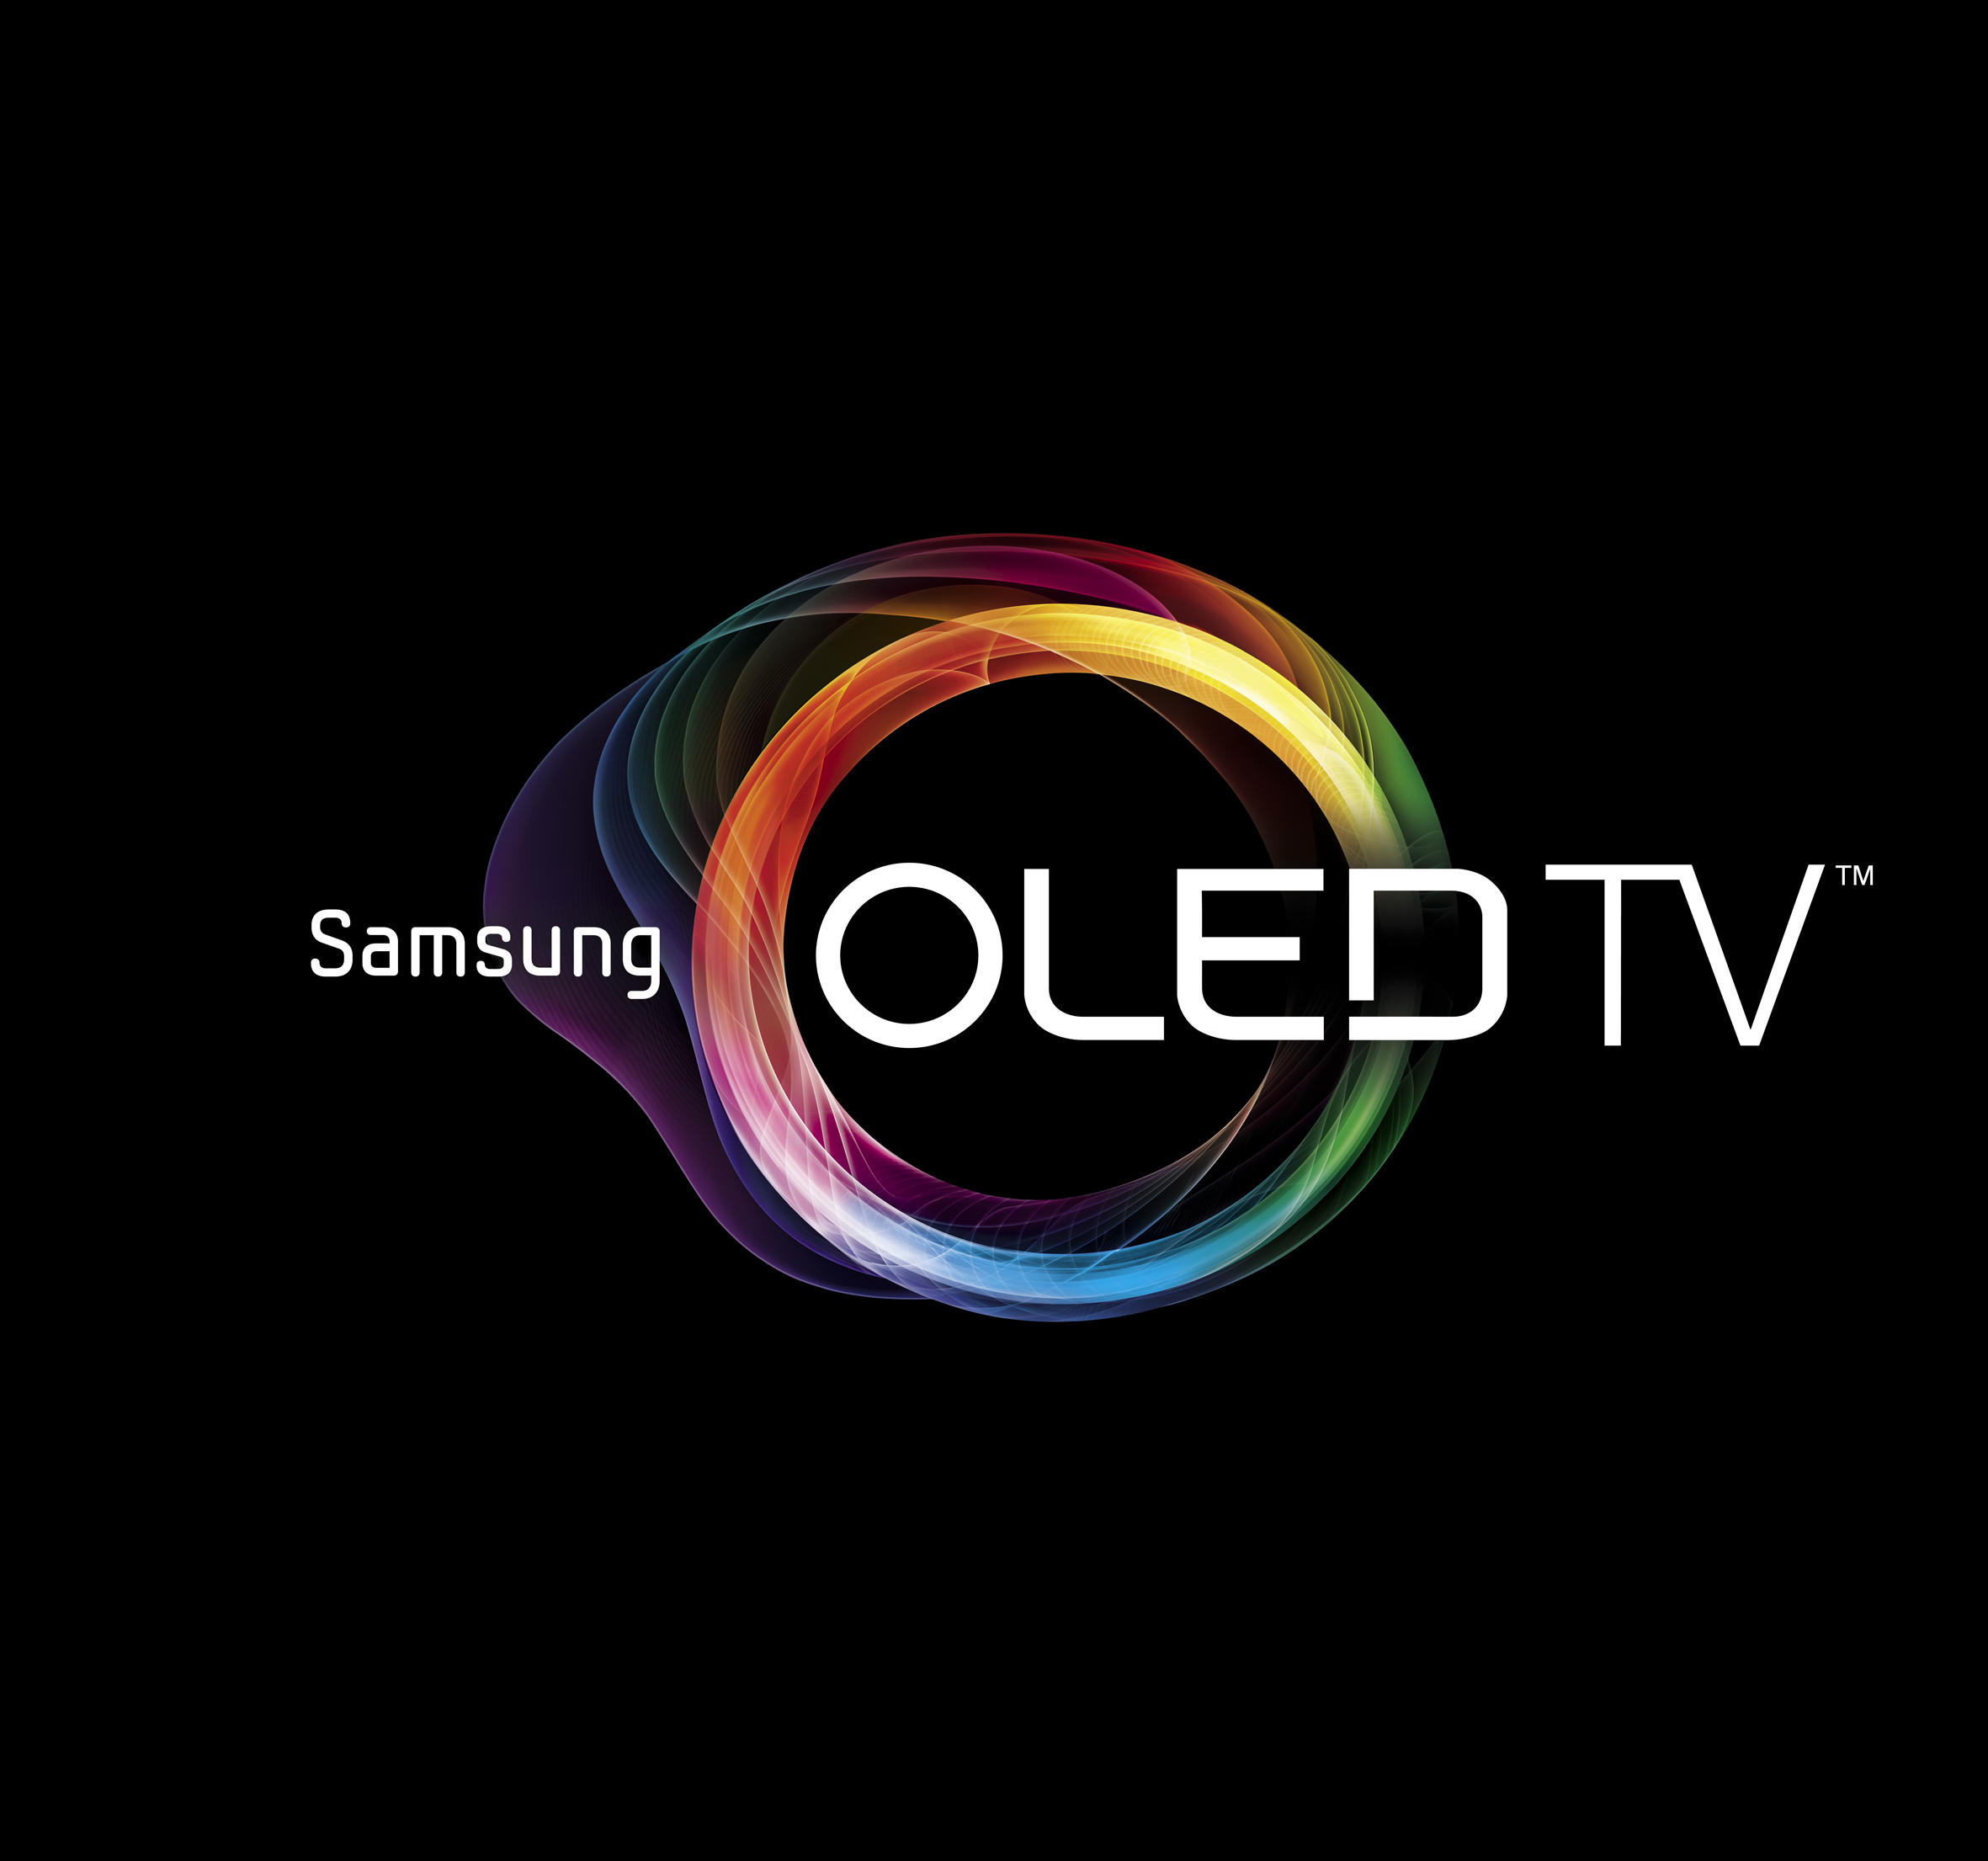 Samsung OLED TV Logo